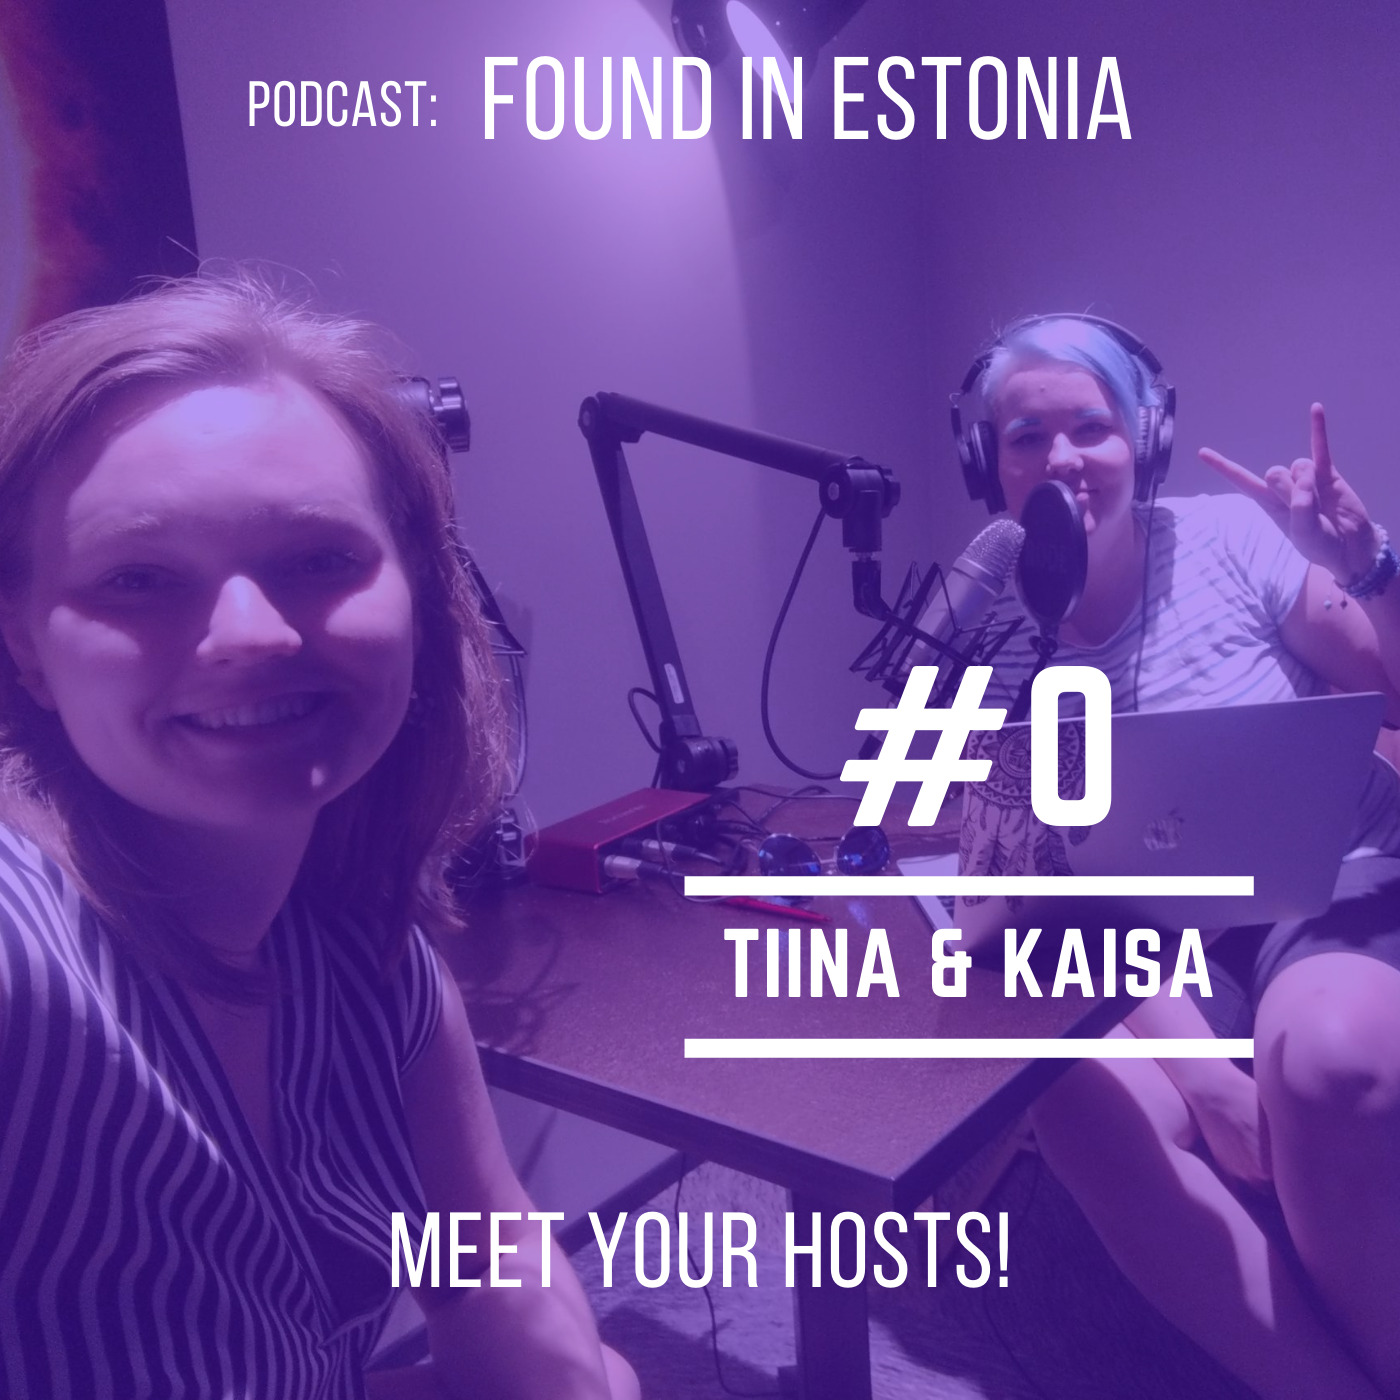 About us - Found in Estonia